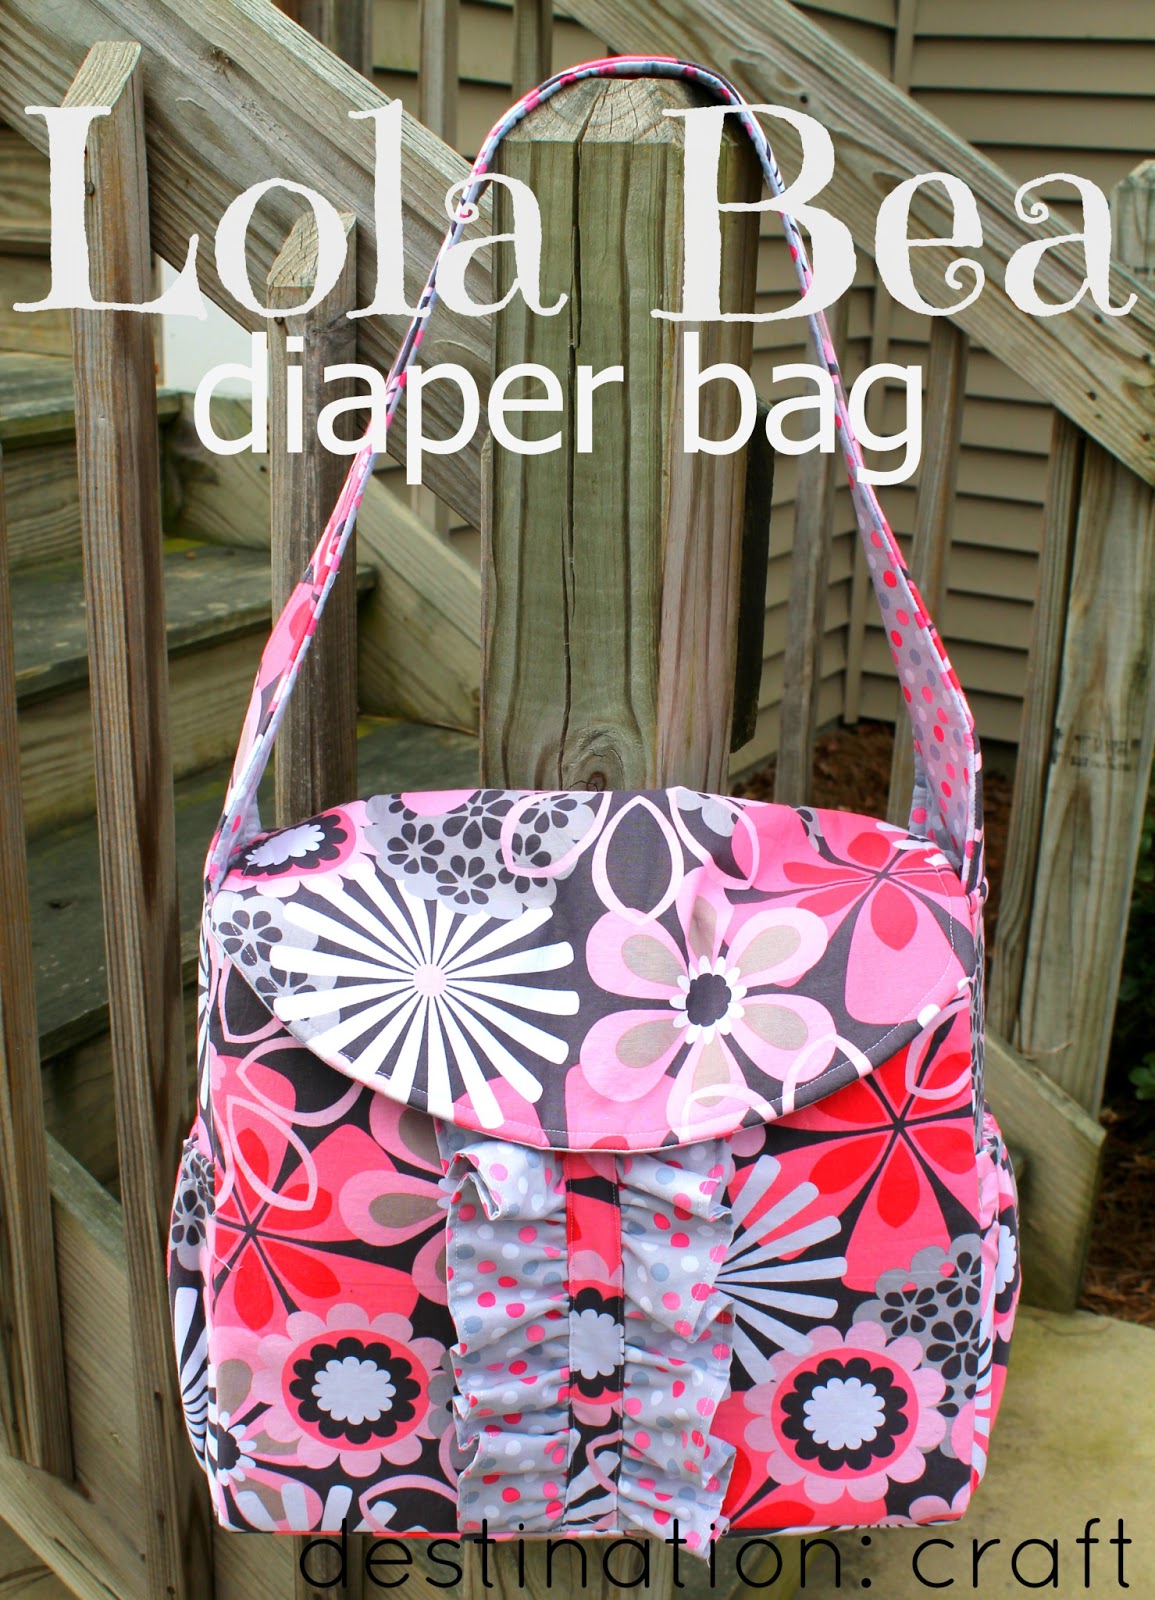 Destination: Craft: Lola Bea Diaper Bag